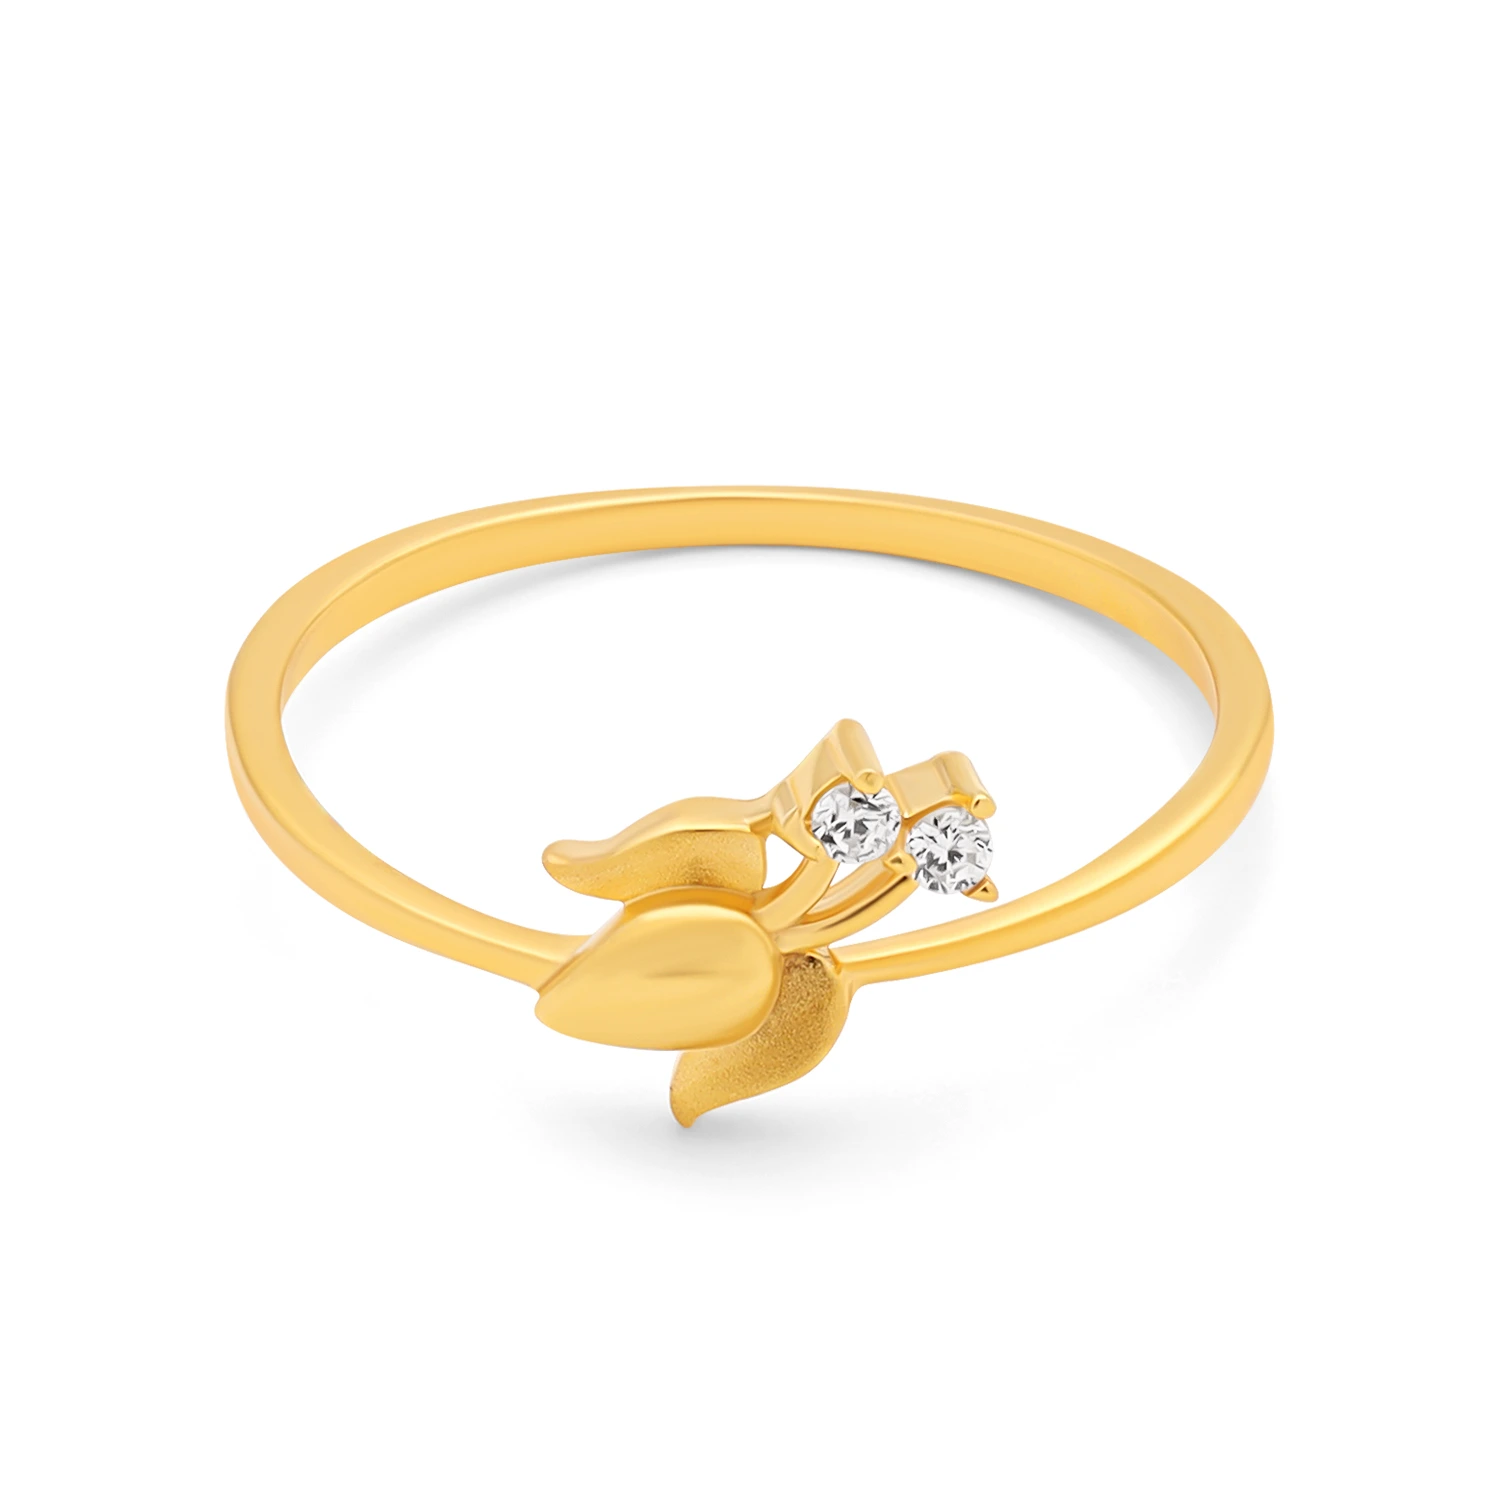 saudi arabia gold wedding ring price| Alibaba.com